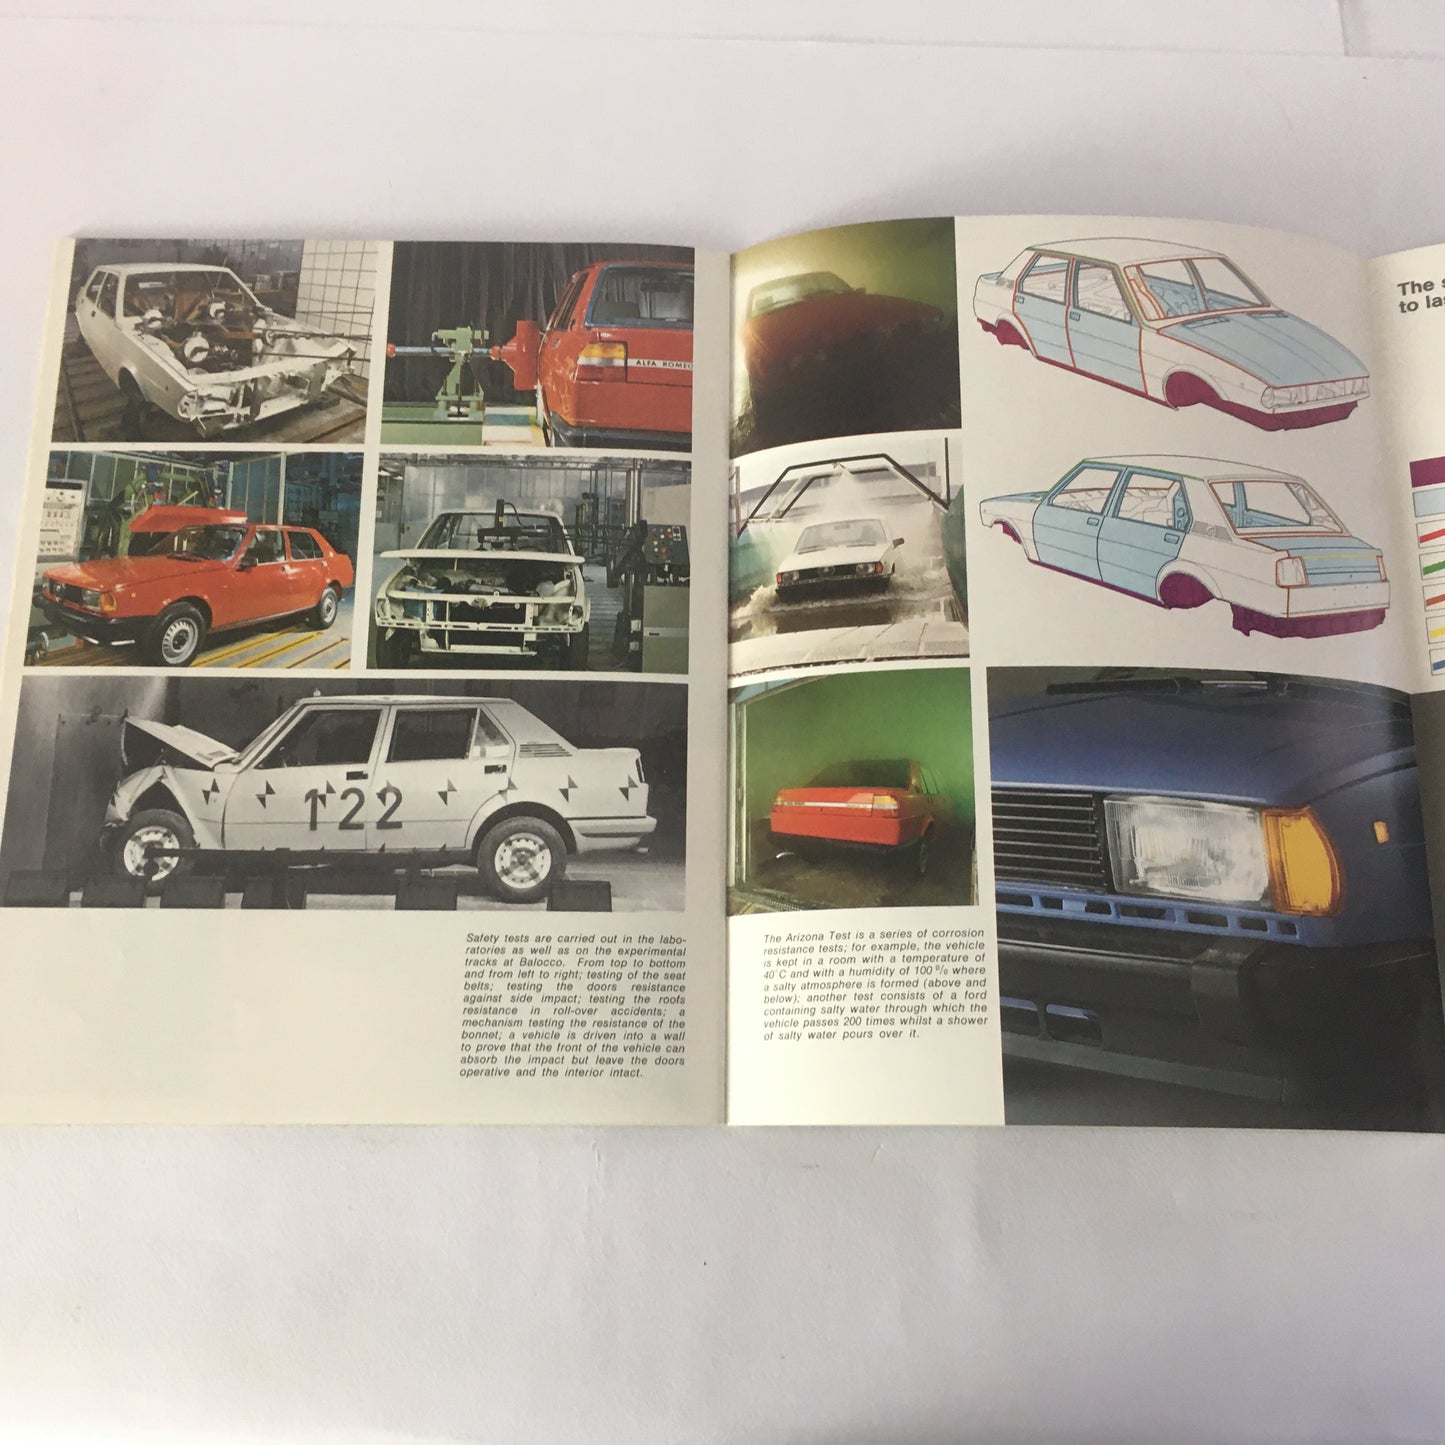 Alfa Romeo, Brochures Giulietta 1.6 and Giulietta 1.8, English Language, 70s 80s